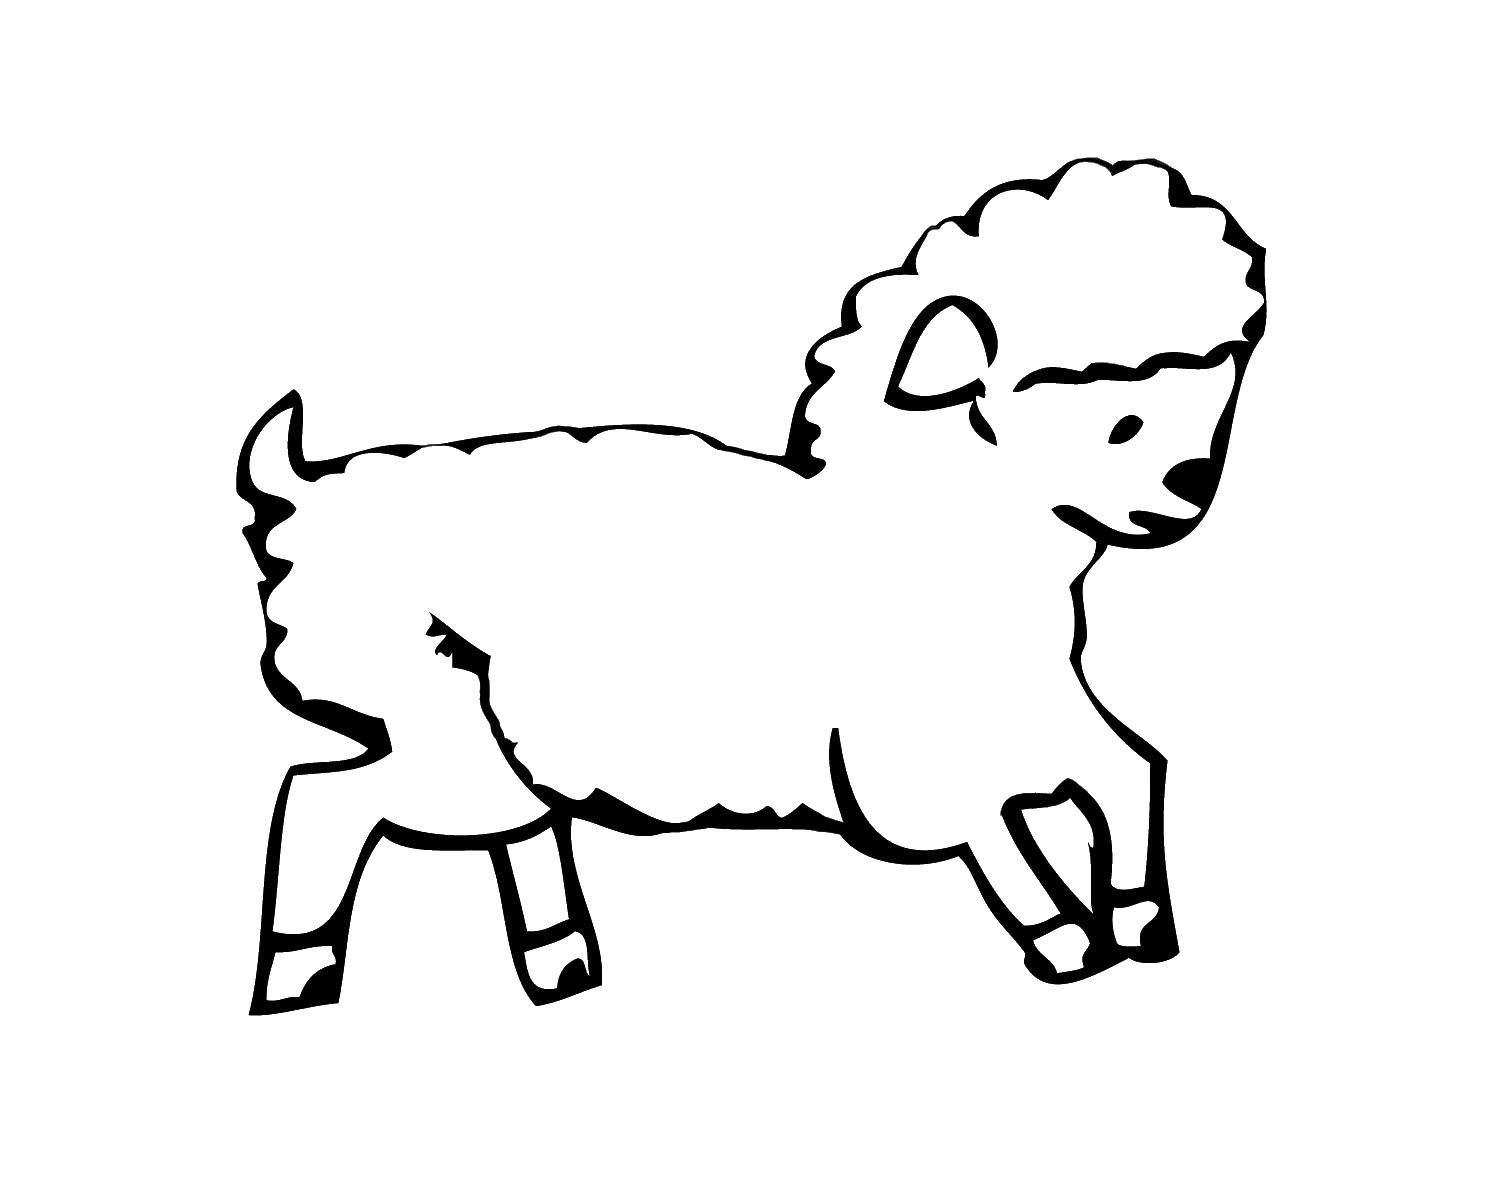 Coloring Running sheep. Category Animals. Tags:  Animals, sheep.